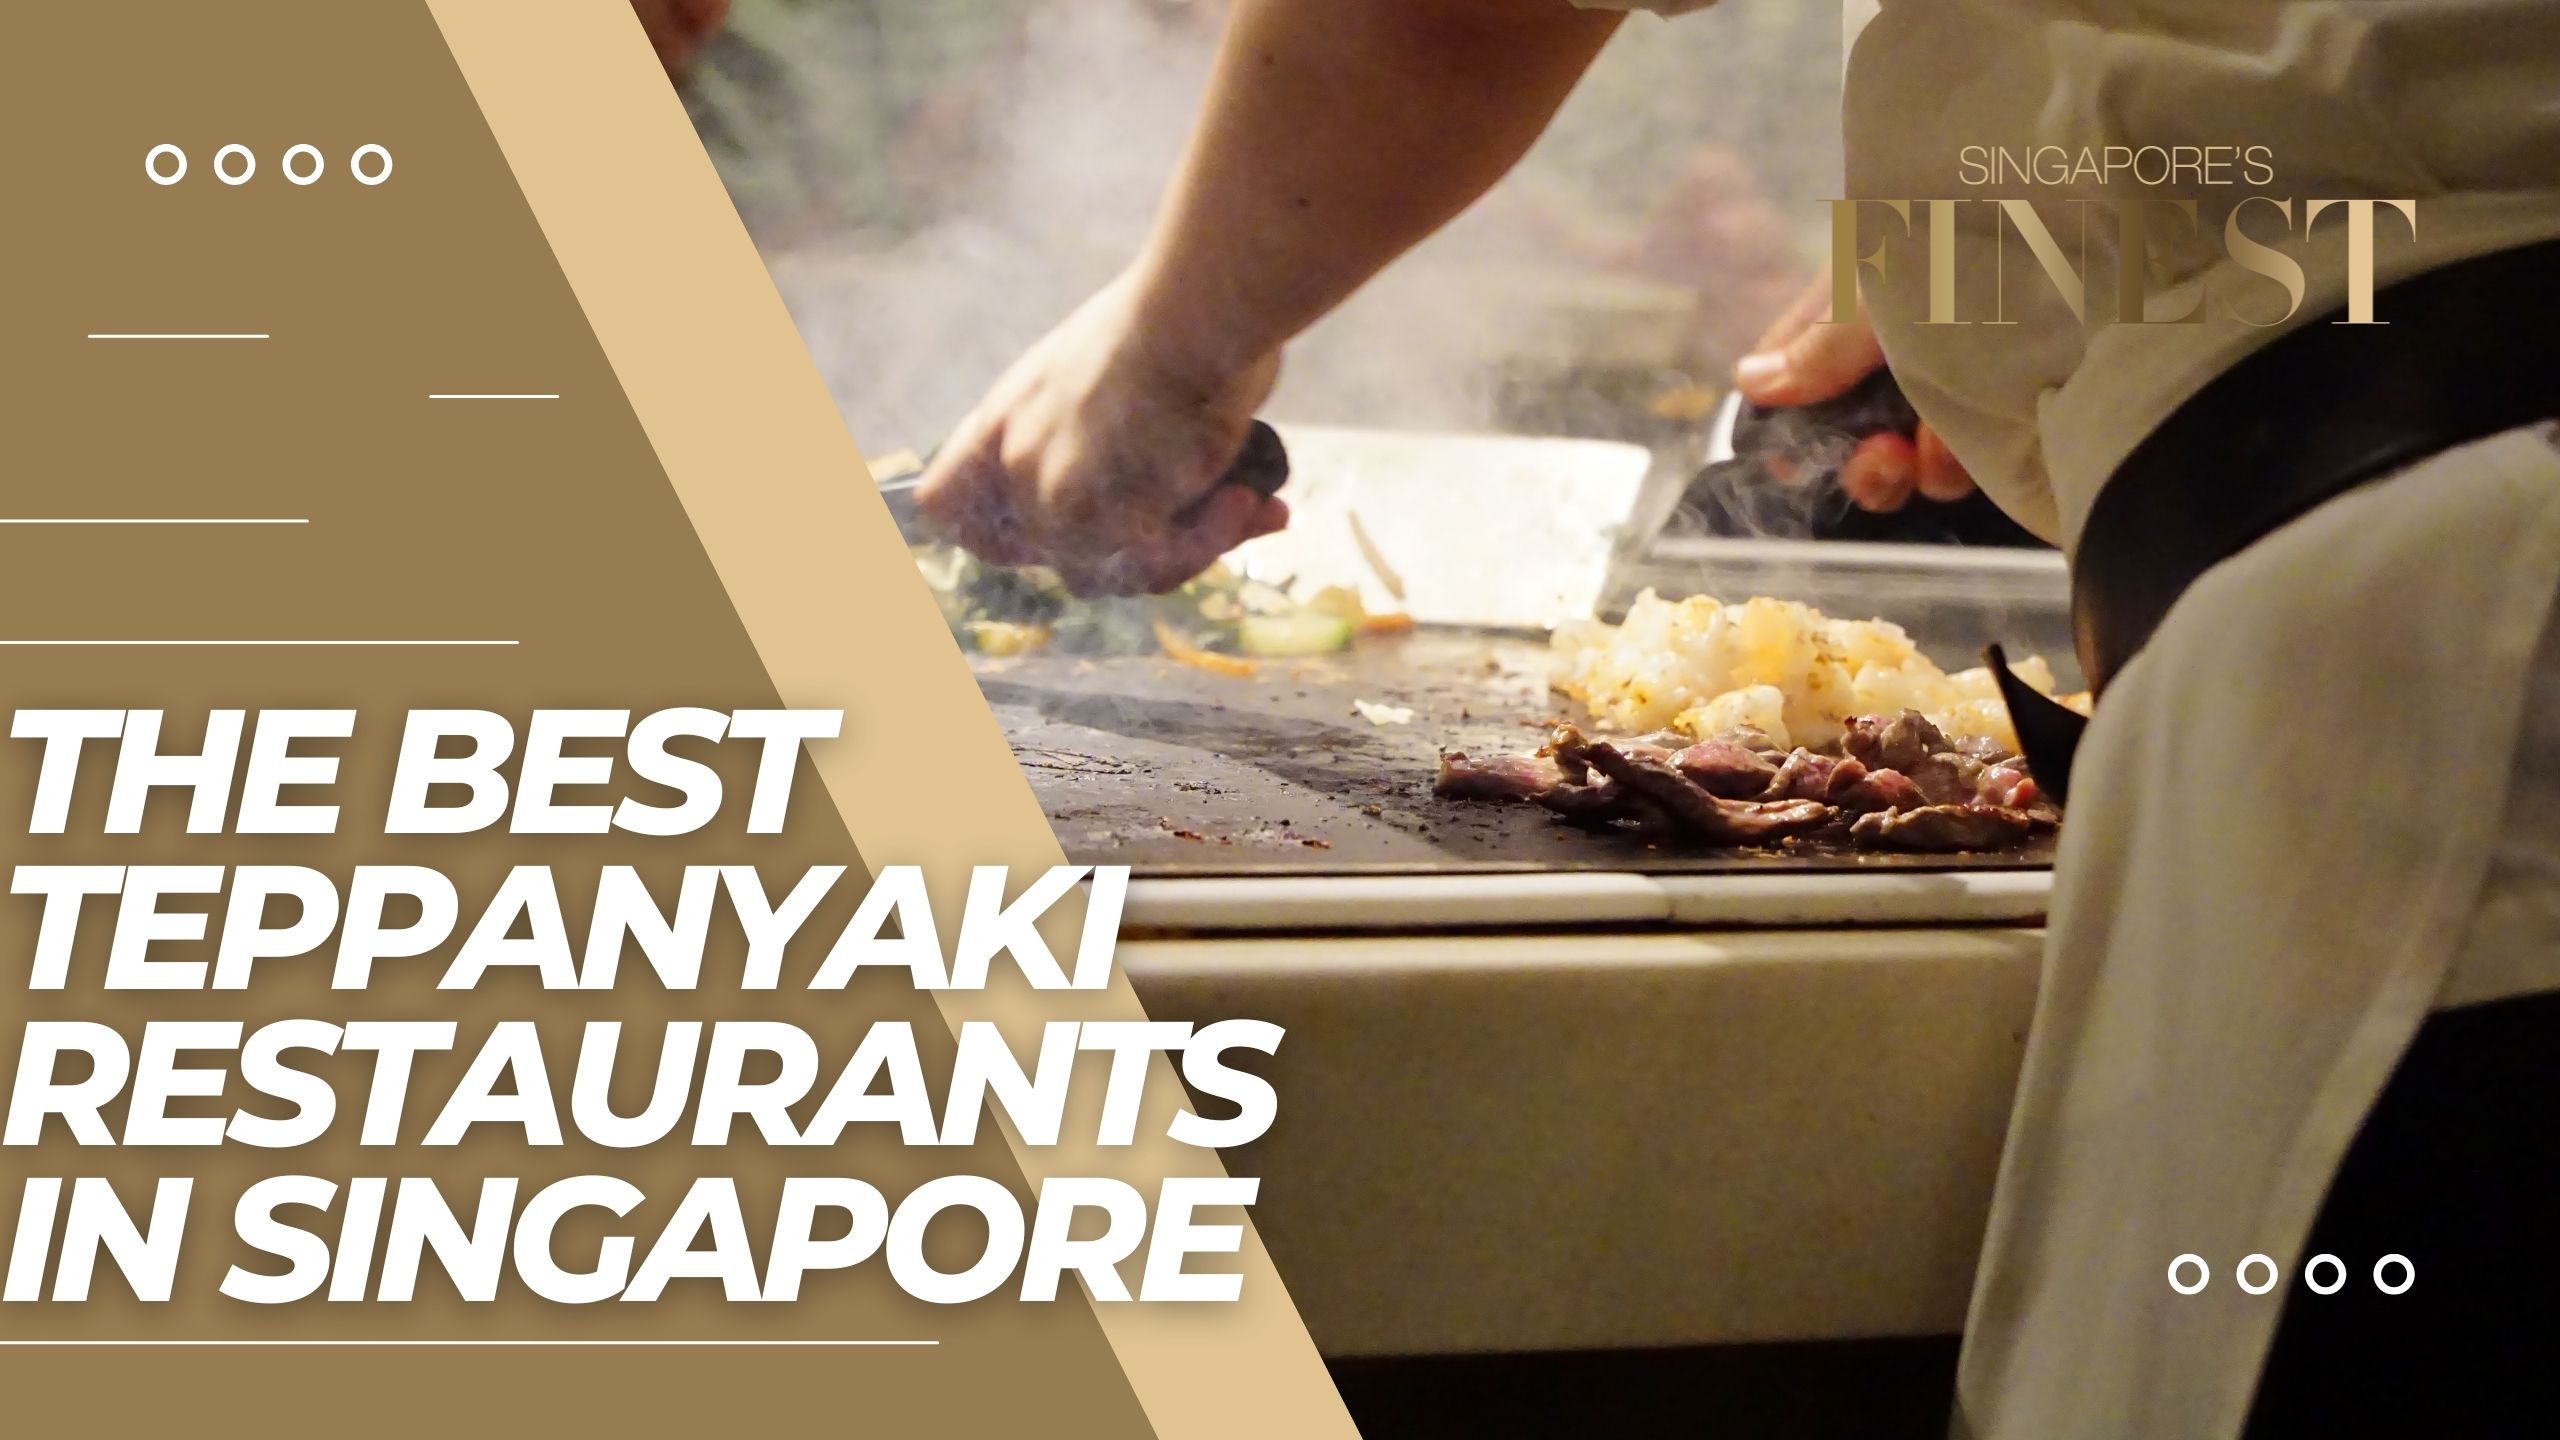 The Finest Teppanyaki Restaurants in Singapore